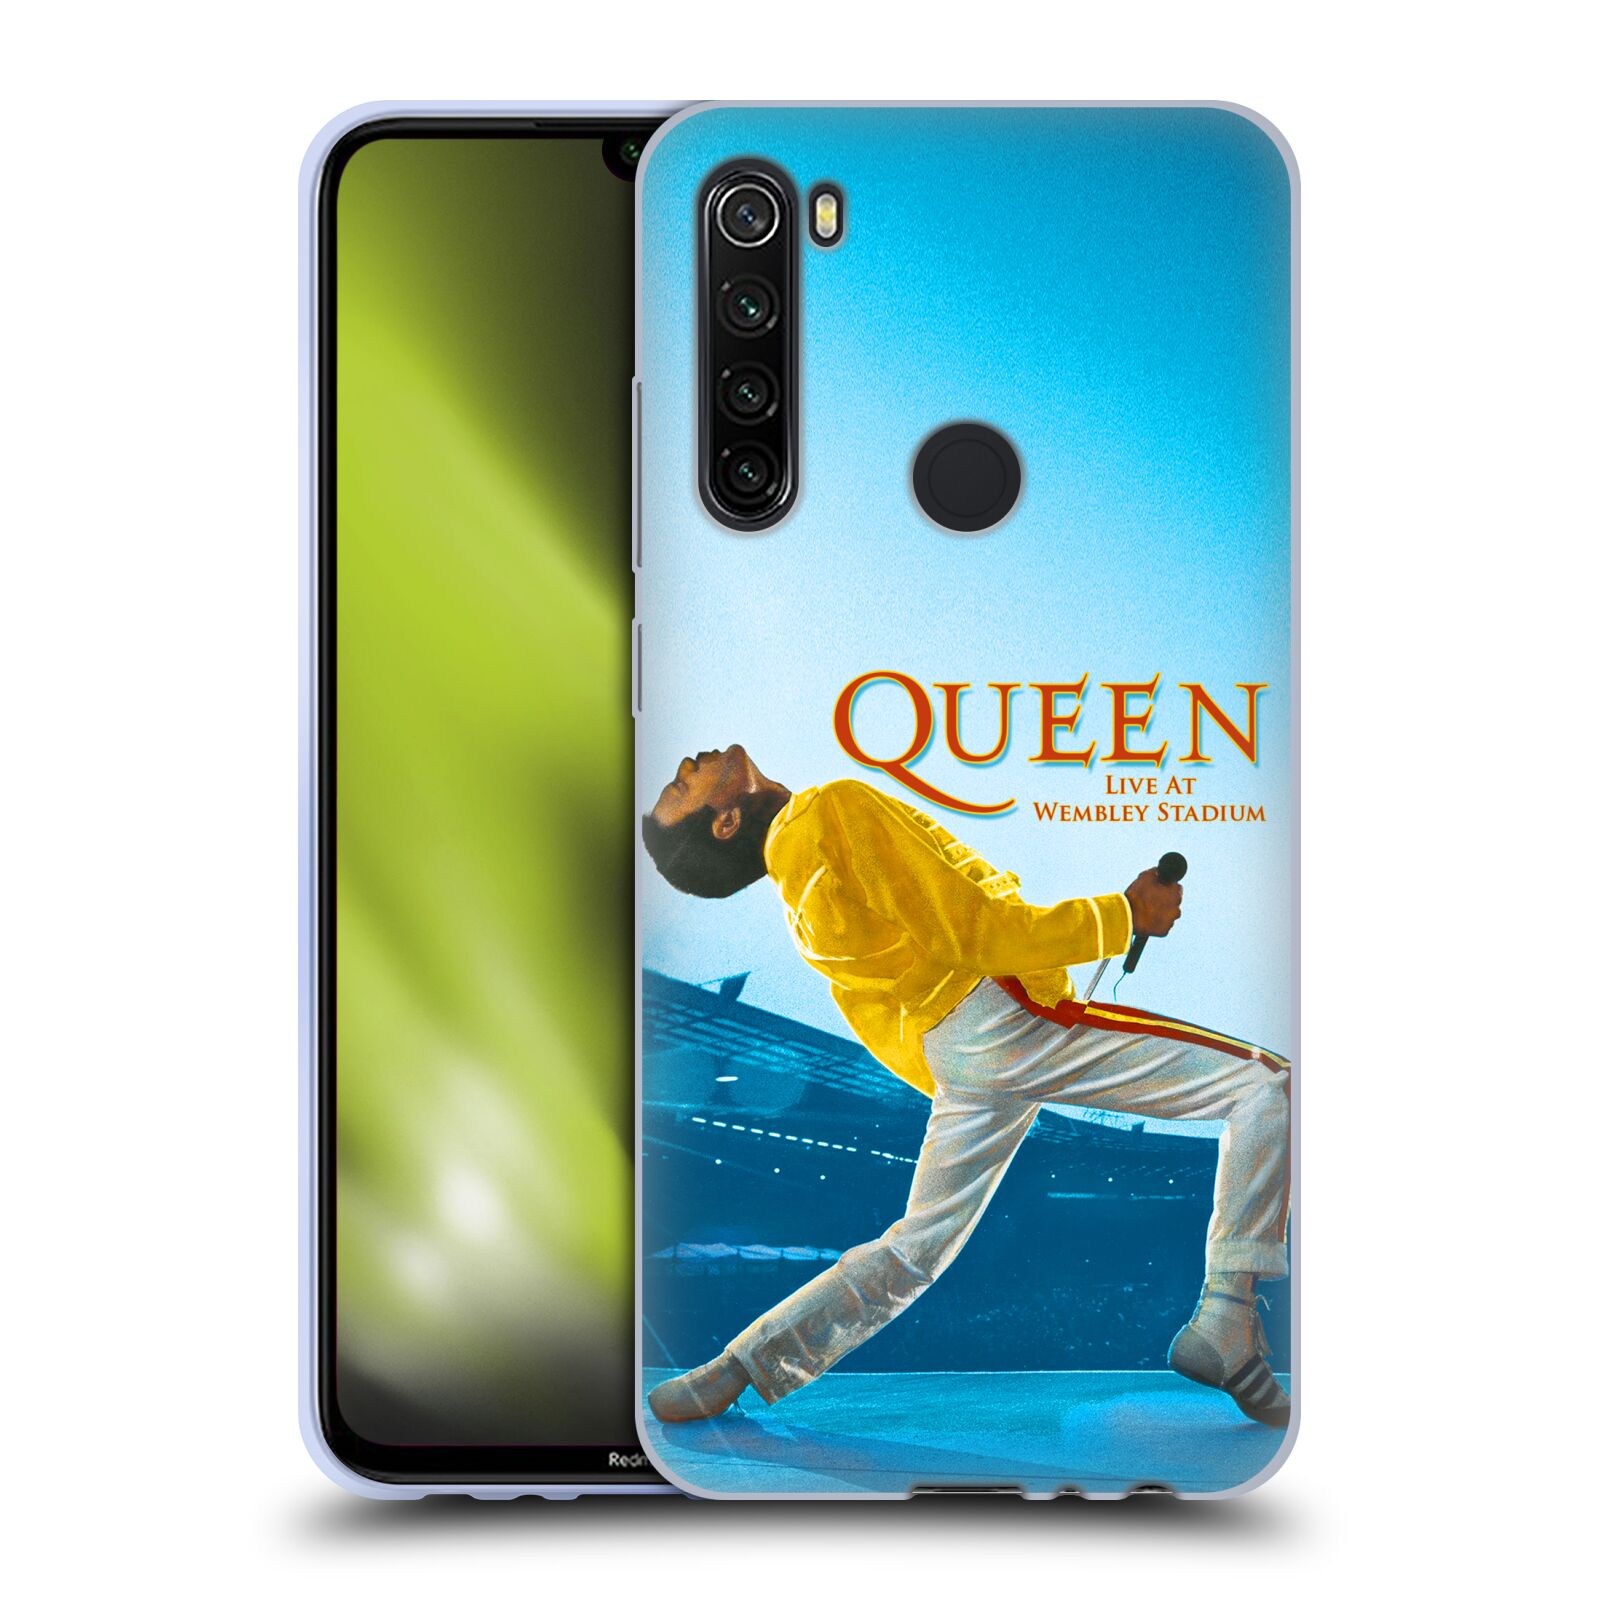 Silikonové pouzdro na mobil Xiaomi Redmi Note 8T - Head Case - Queen - Freddie Mercury (Silikonový kryt, obal, pouzdro na mobilní telefon Xiaomi Redmi Note 8T s motivem Queen - Freddie Mercury)